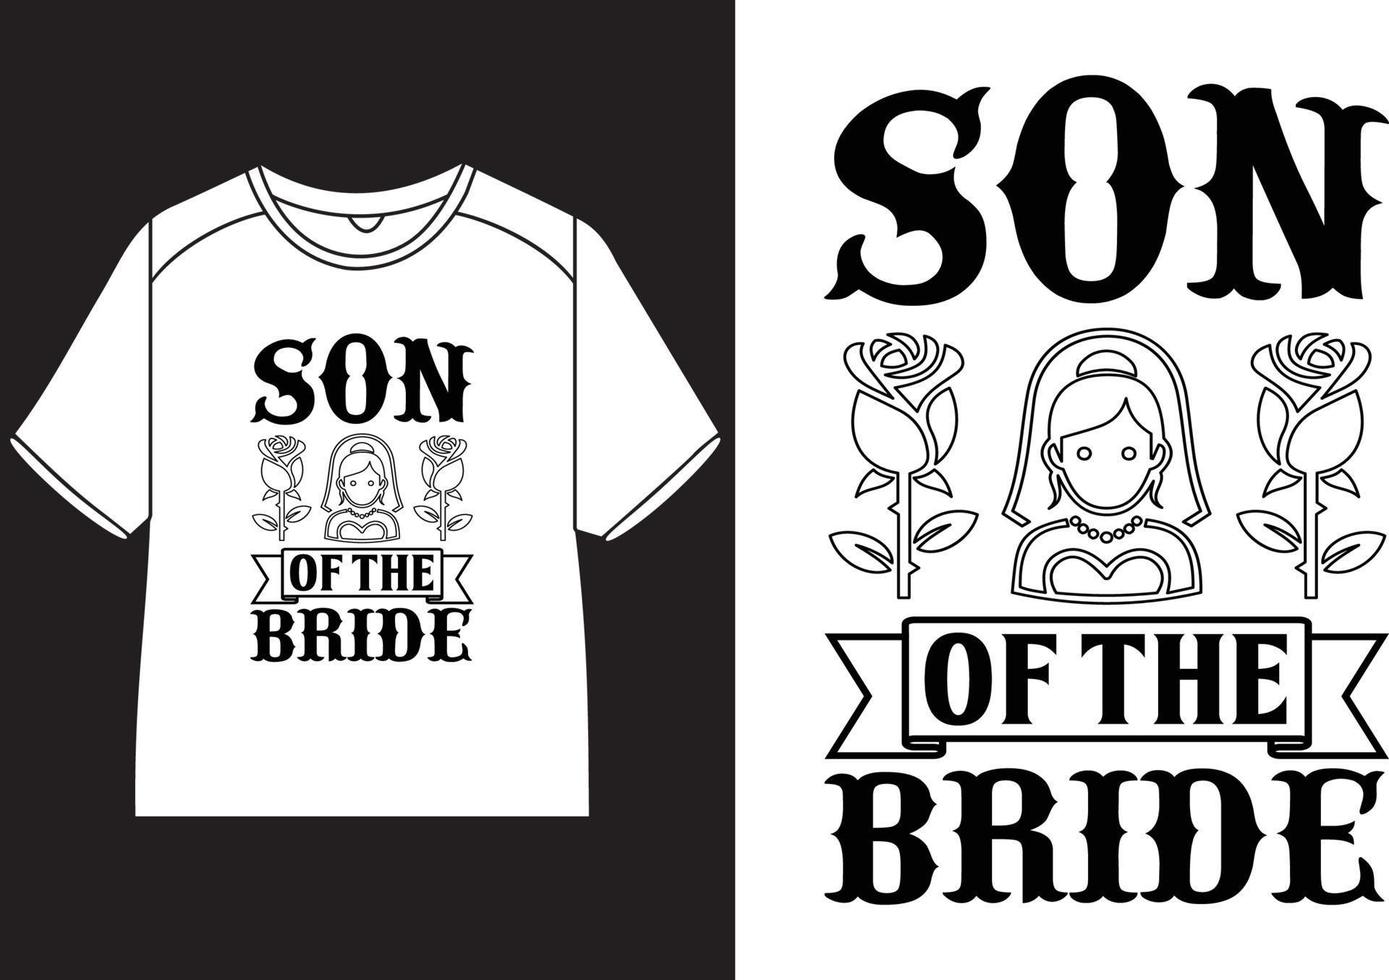 Son of the bride T-Shirt Design vector